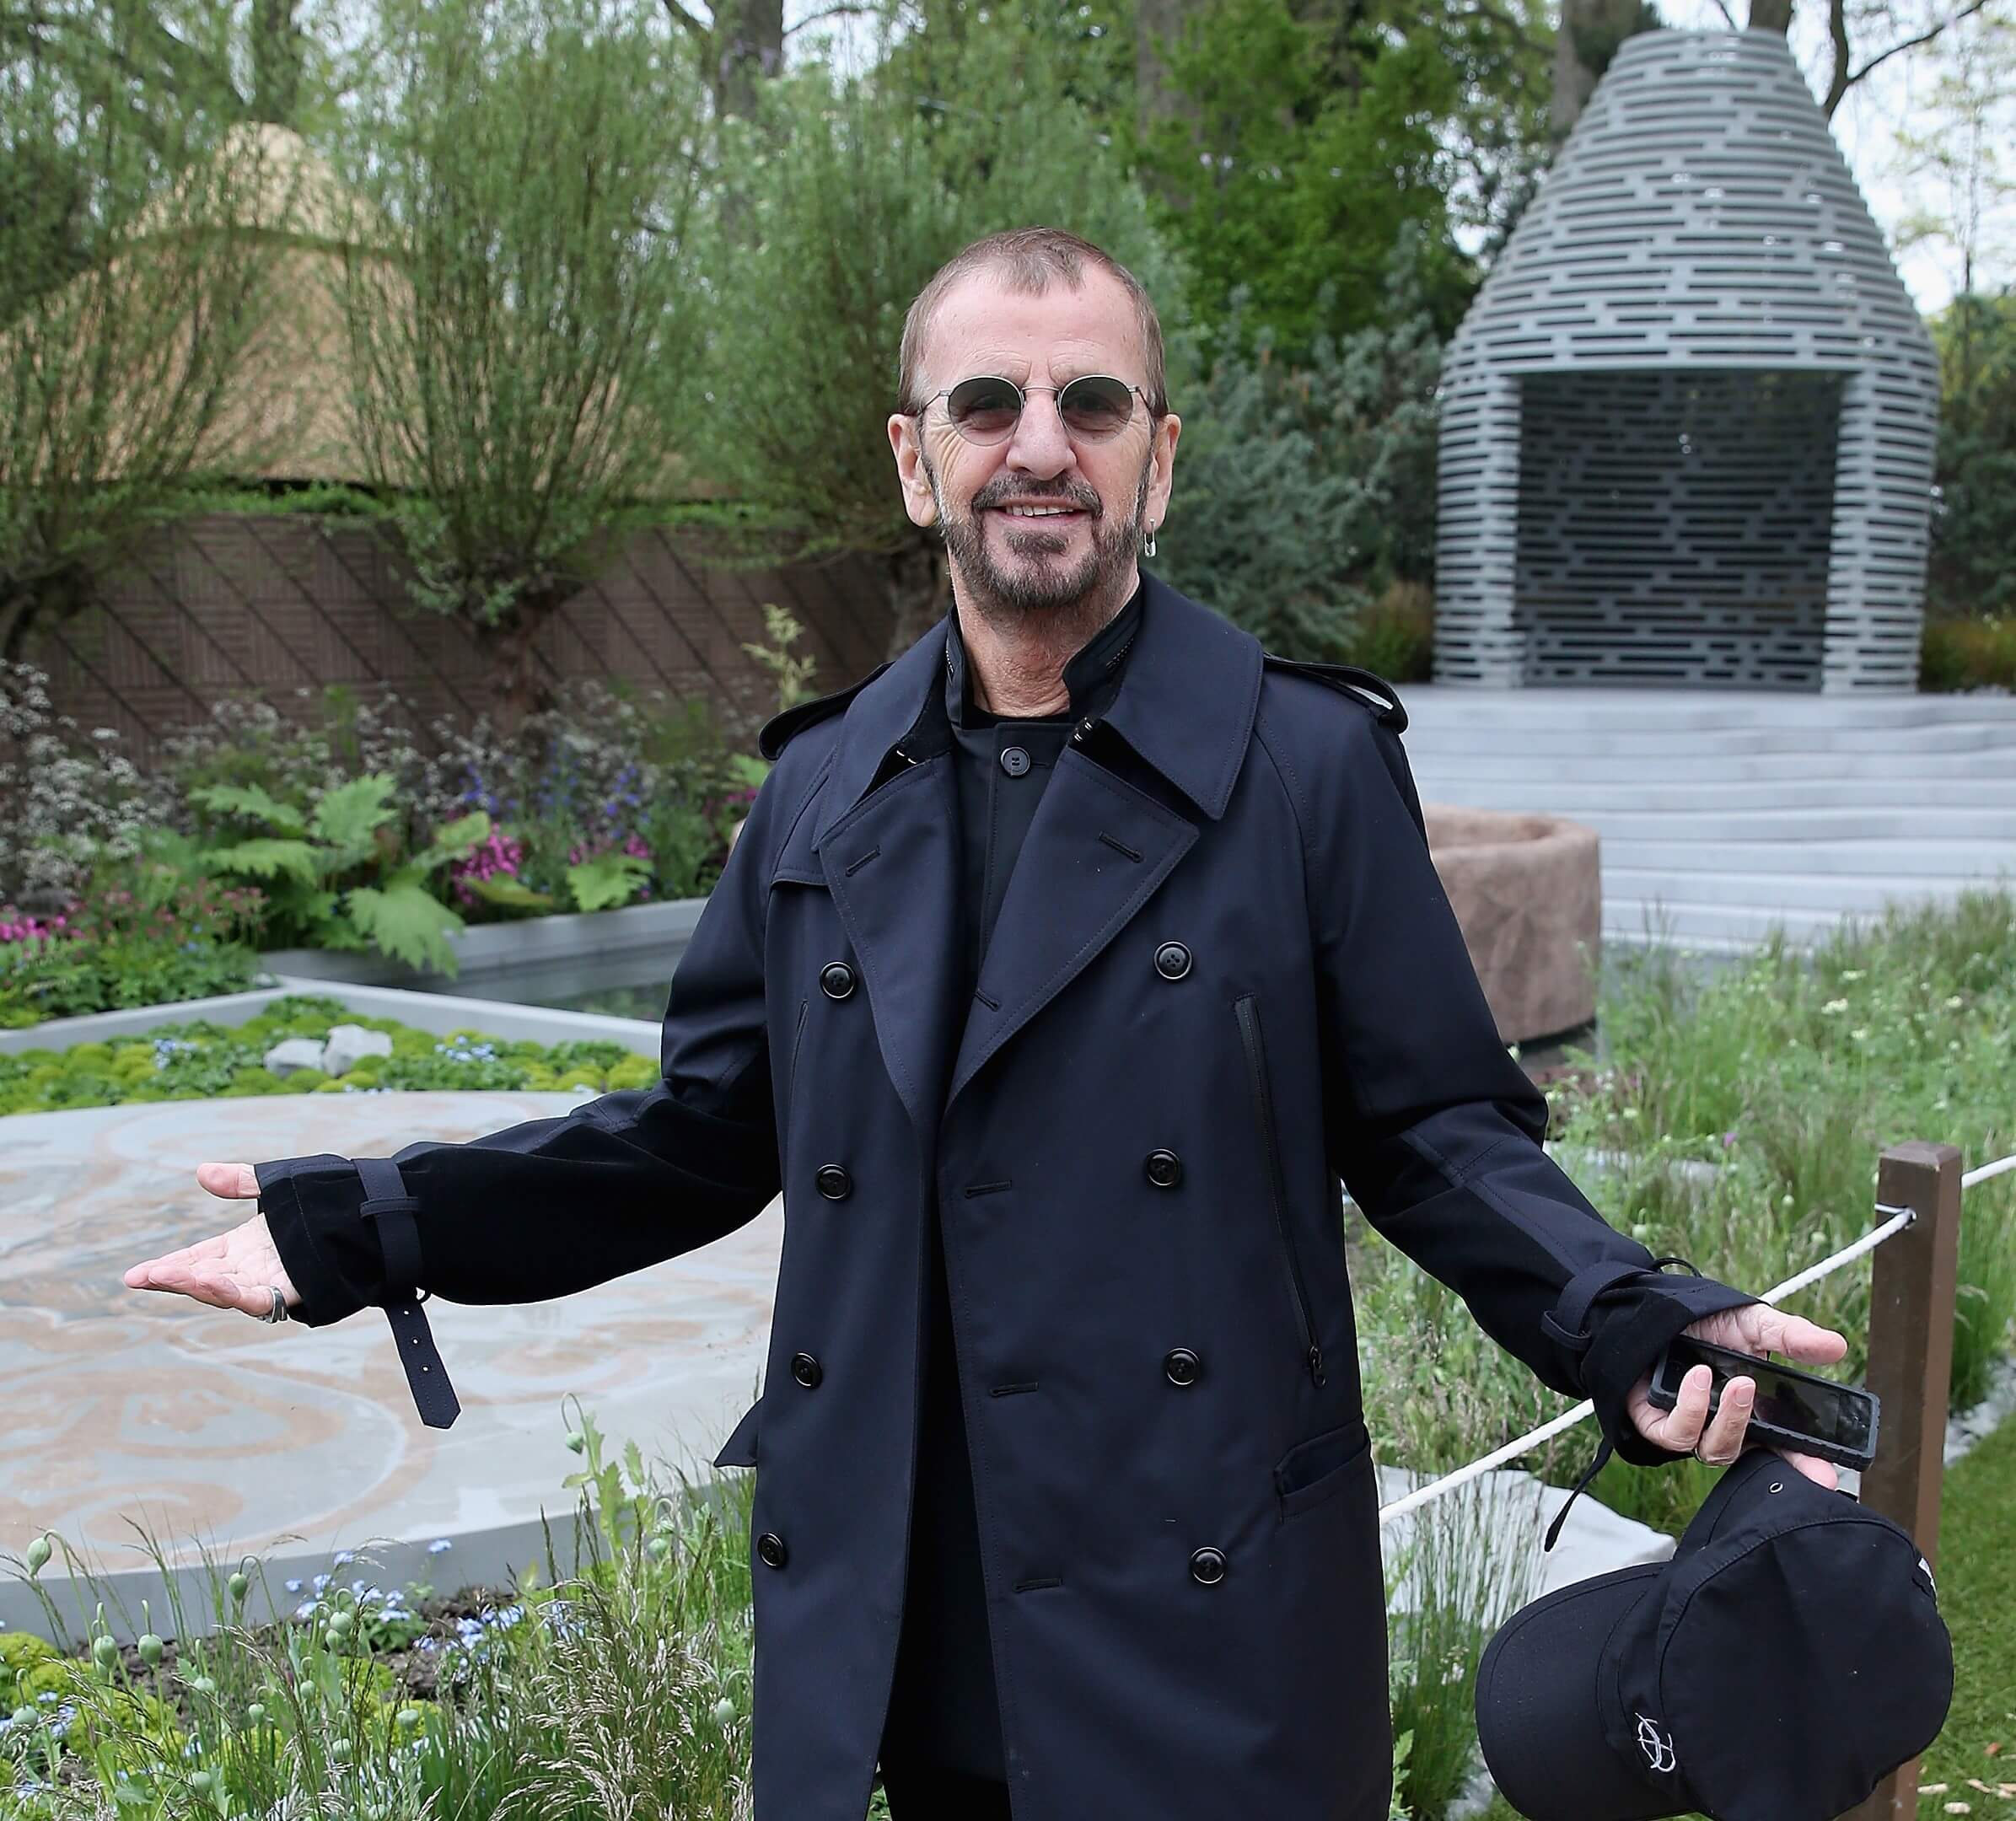 "Photograph" singer Ringo Starr wearing black